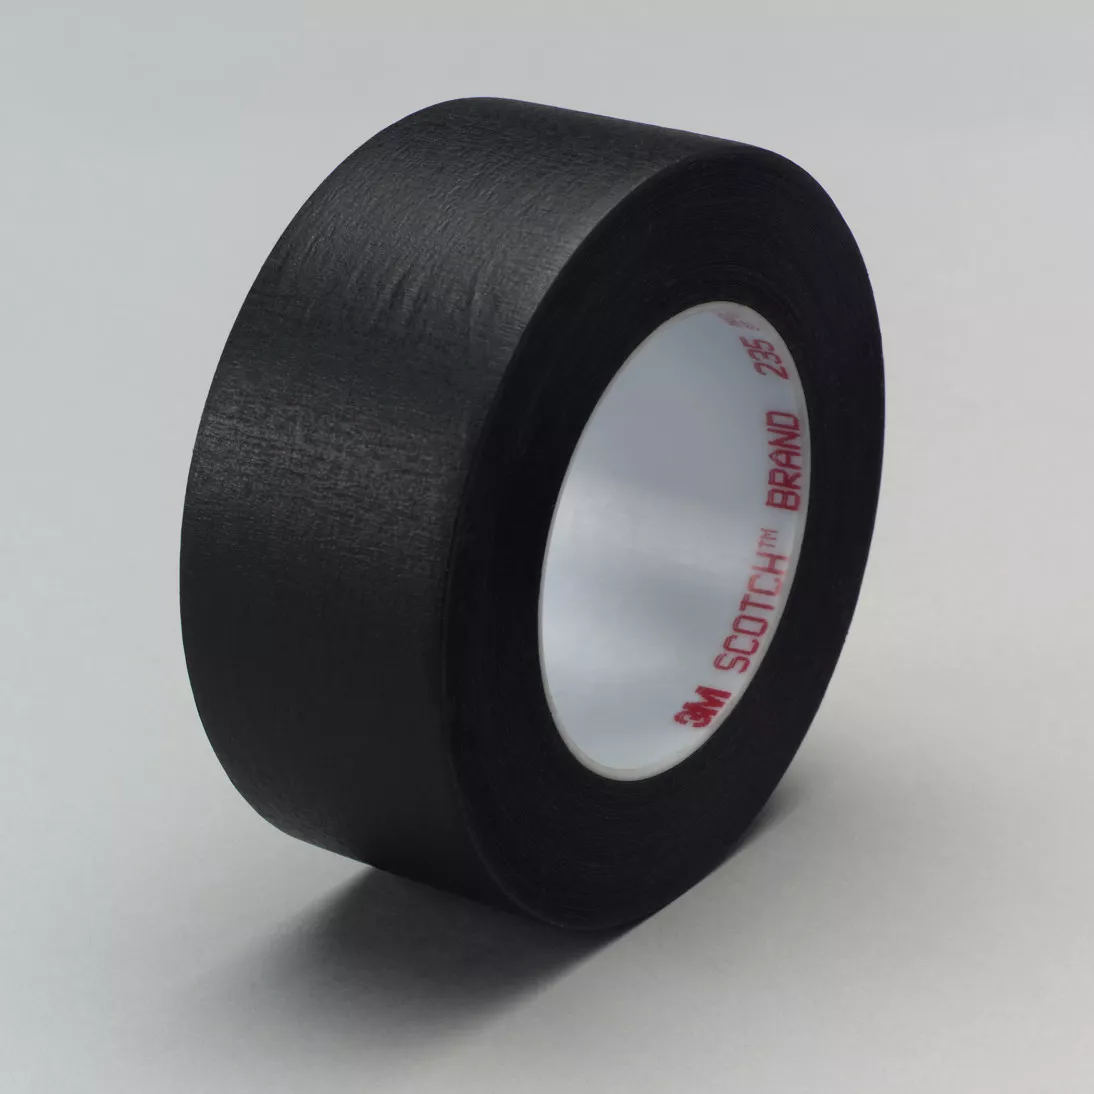 3M™ Photographic Tape 235, Black, 3 in x 60 yd, 7 mil, 12 rolls per
case, Plastic Core